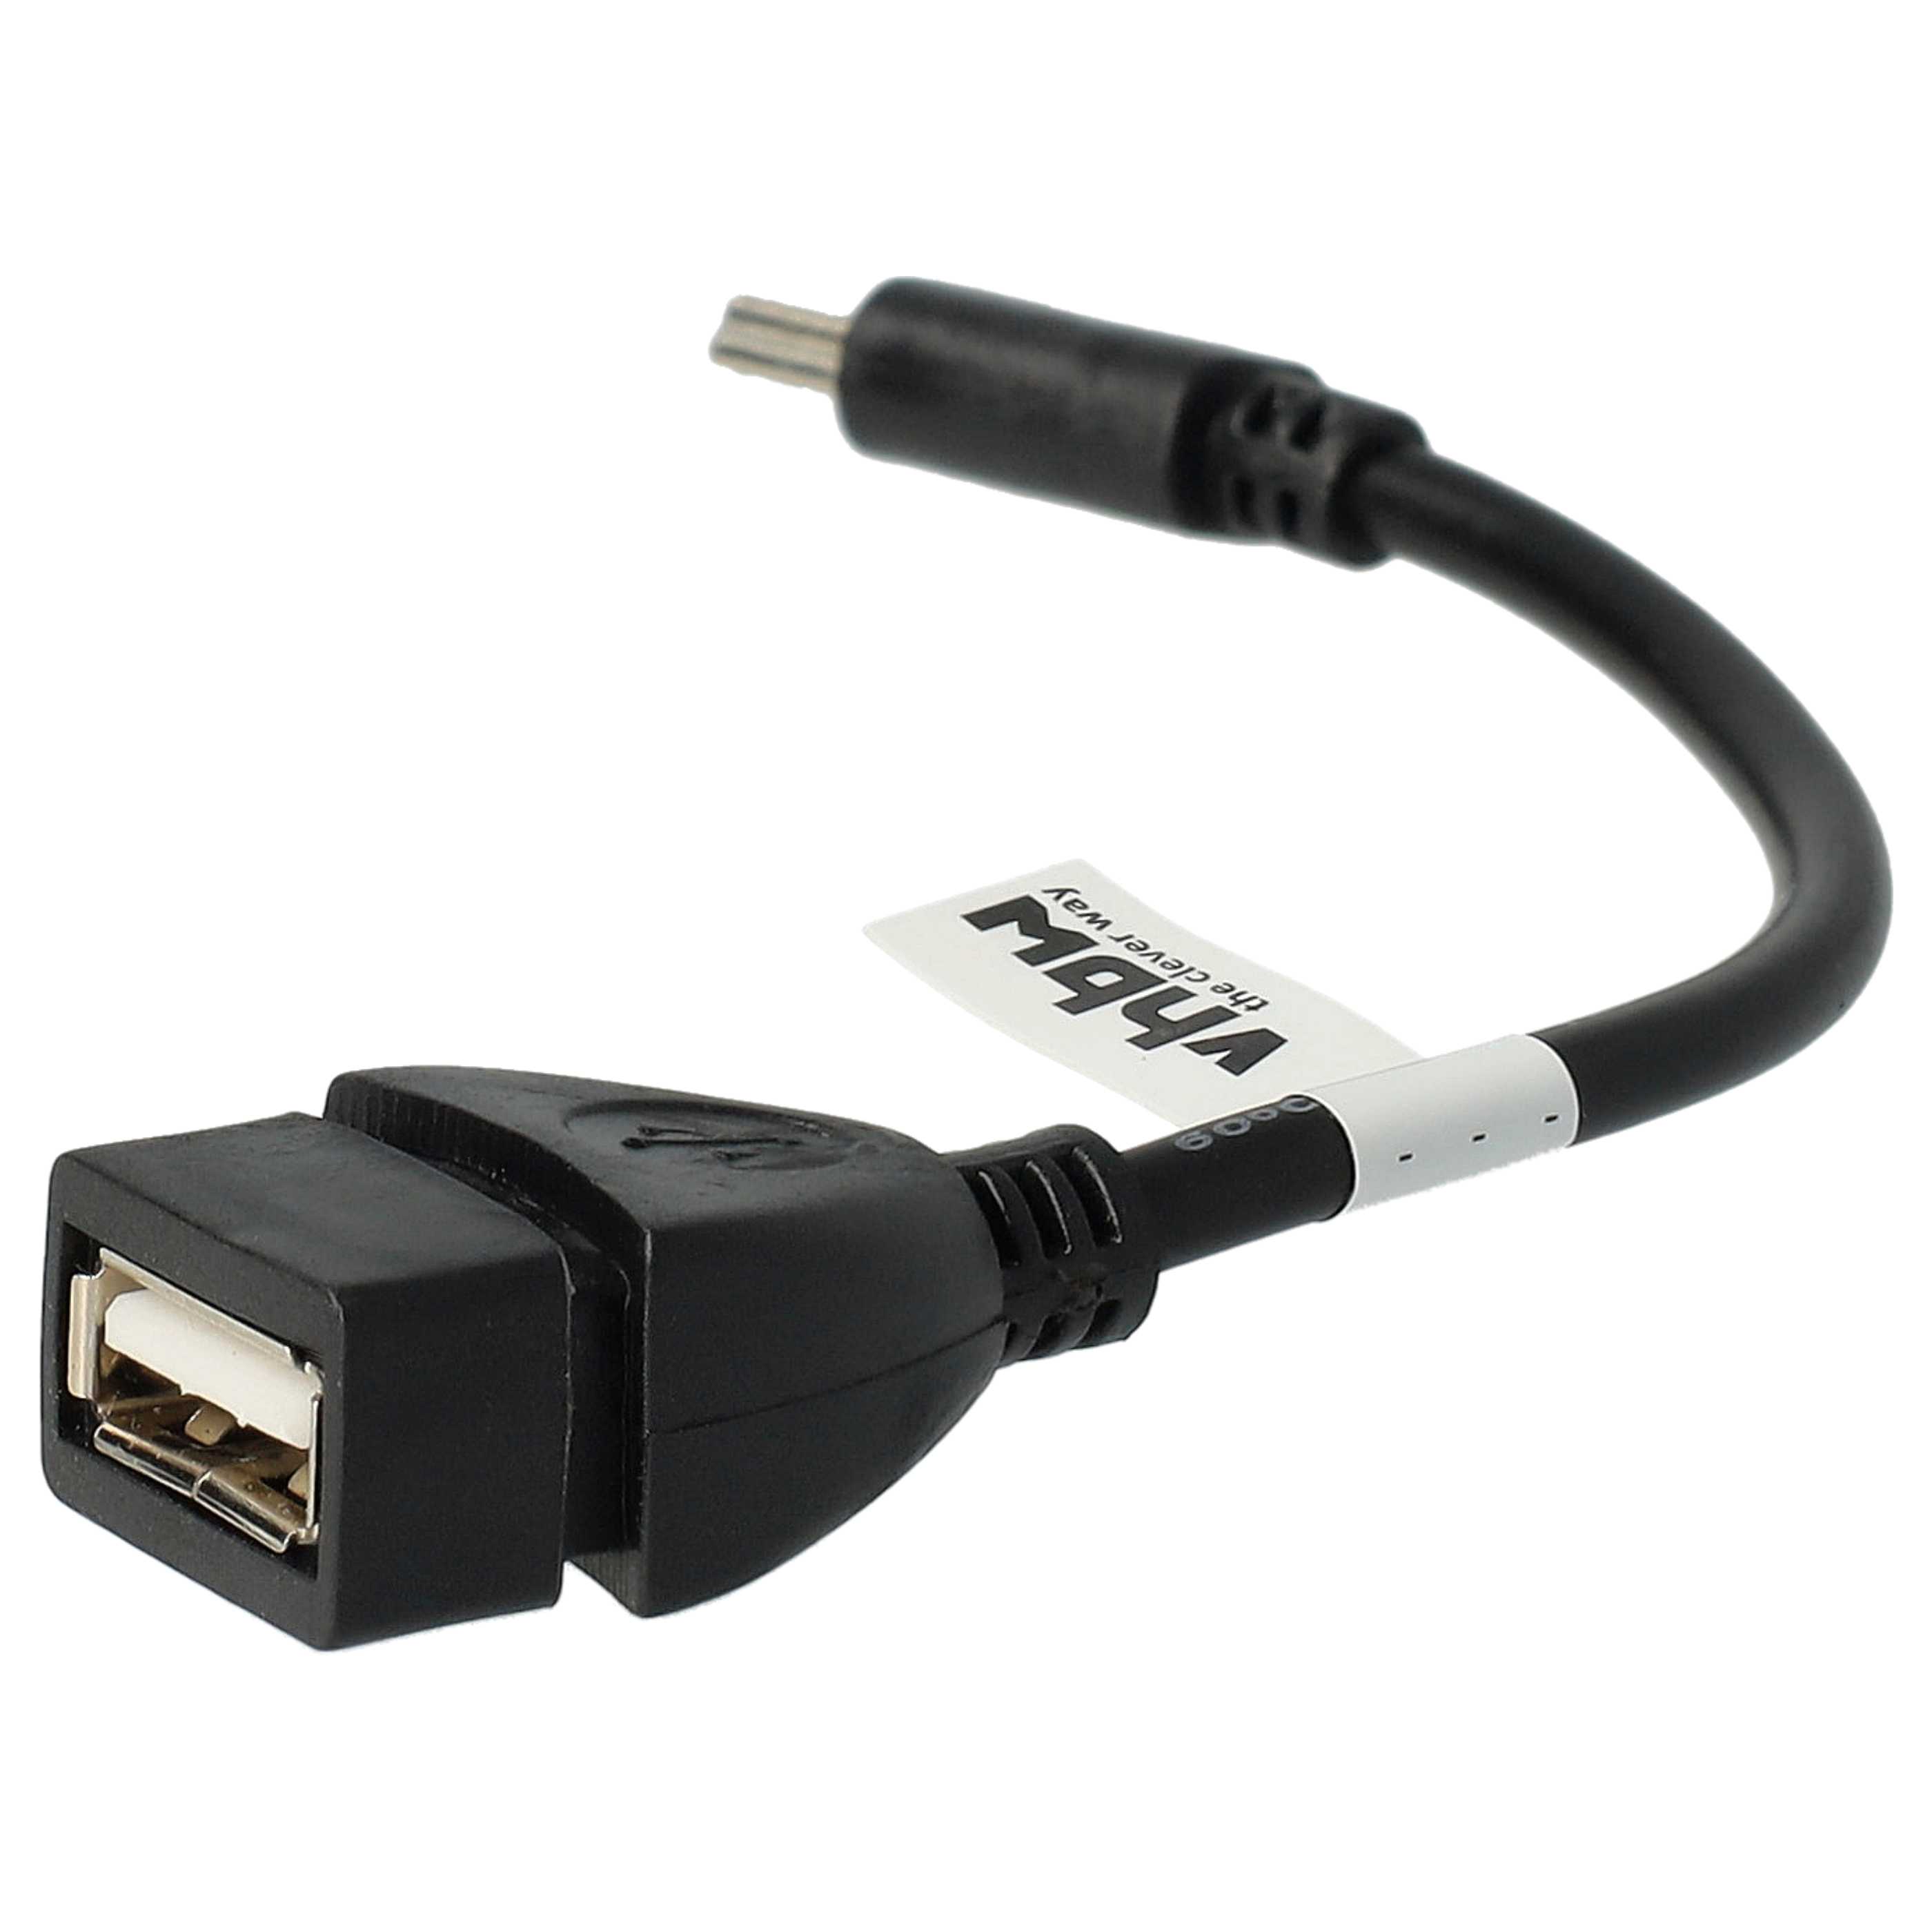 Adapter OTG mini-USB (male) to USB port (female) for smartphone, tablet, netbook, laptop